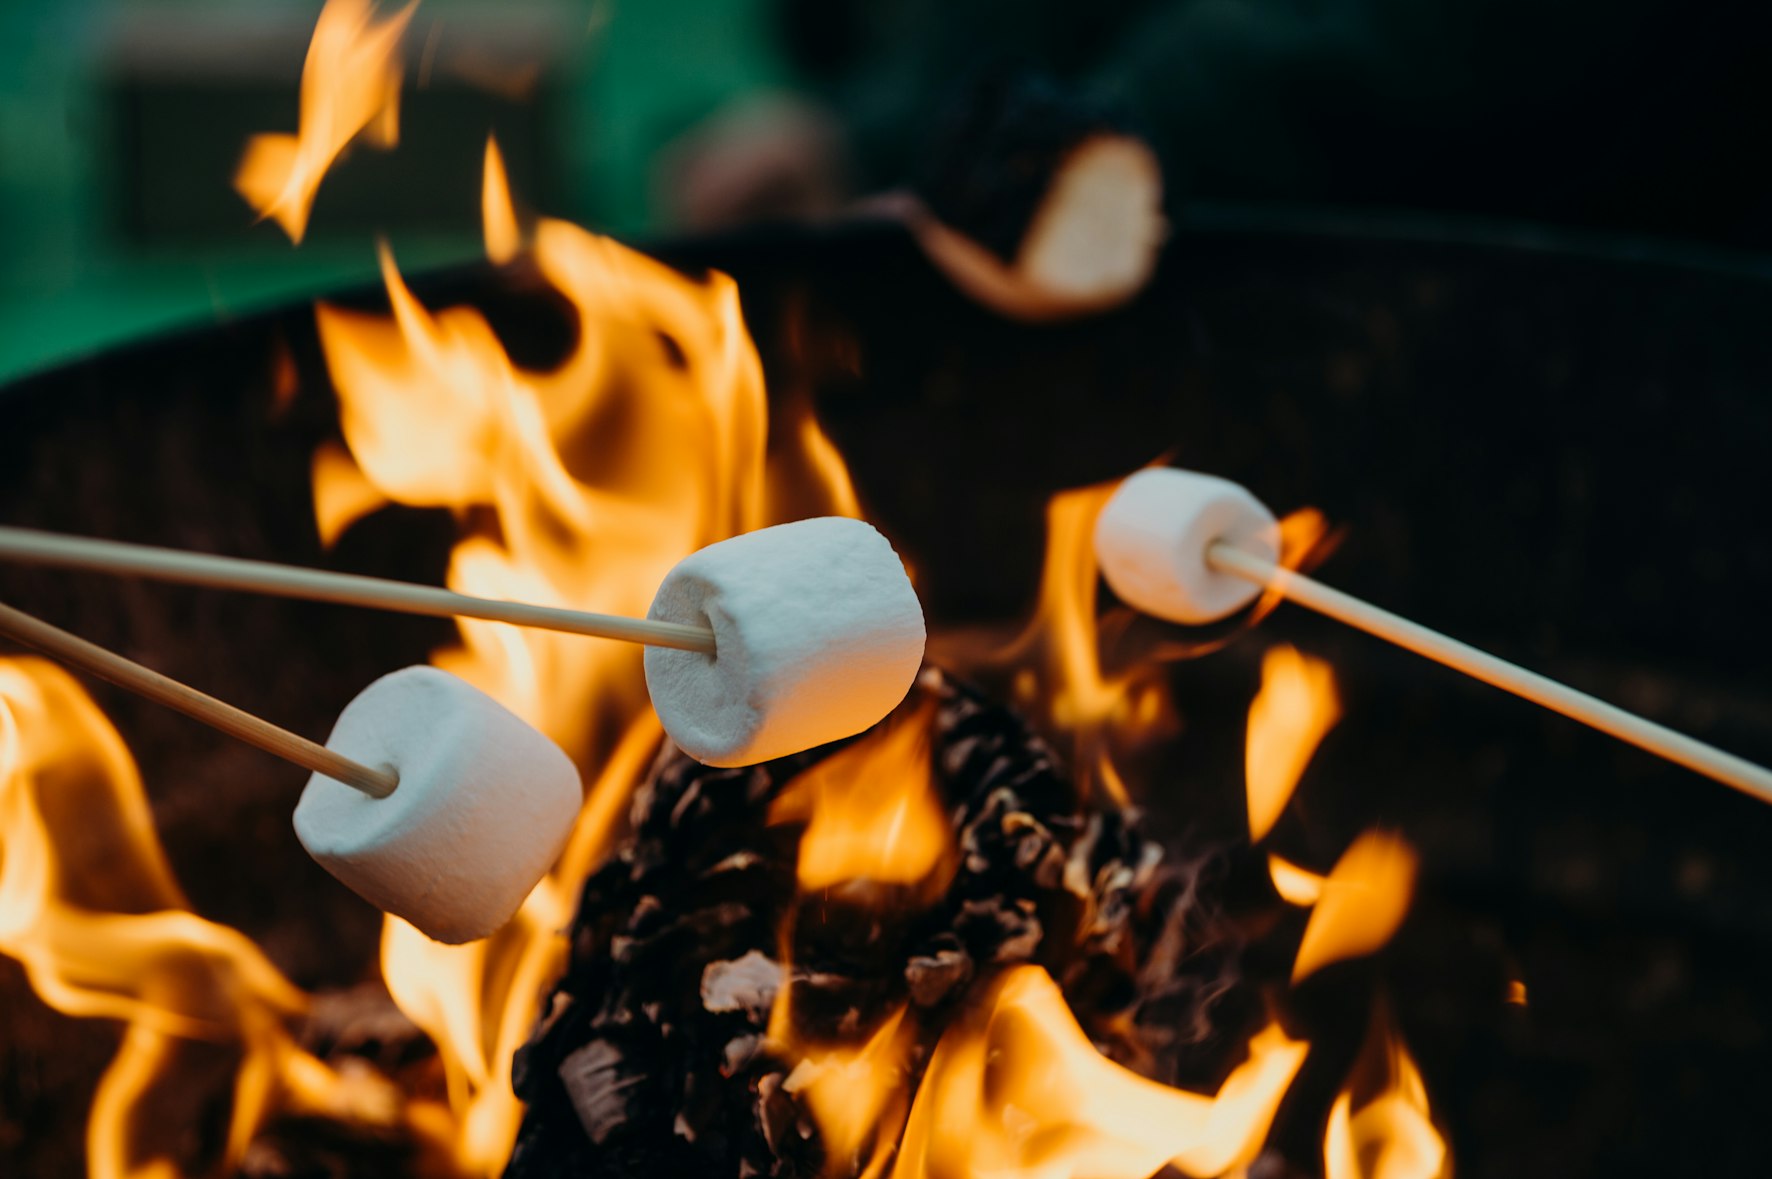 Cooking smores over the campfire at Bodnarosa.